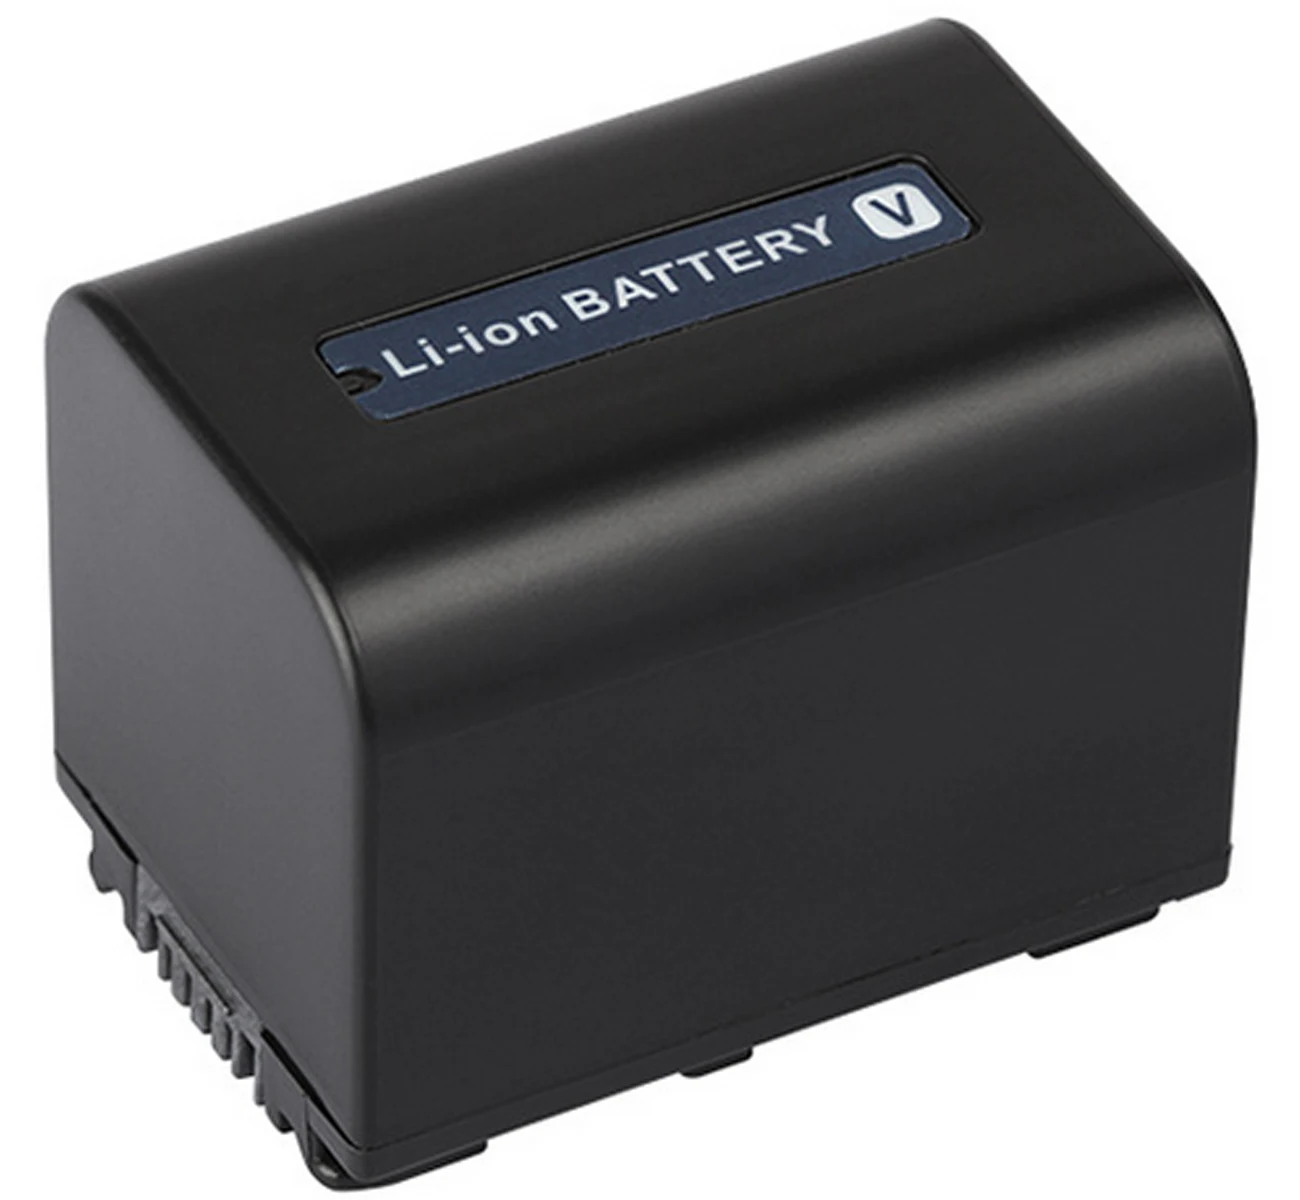 NP-FV70 Батарея упаковке с открытыми порами+ Зарядное устройство для sony DCR-SR15, DCR-SR20, DCR-SR21, DCR-SR58, DCR-SR68, DCR-SR78, DCR-SR88 Handycam